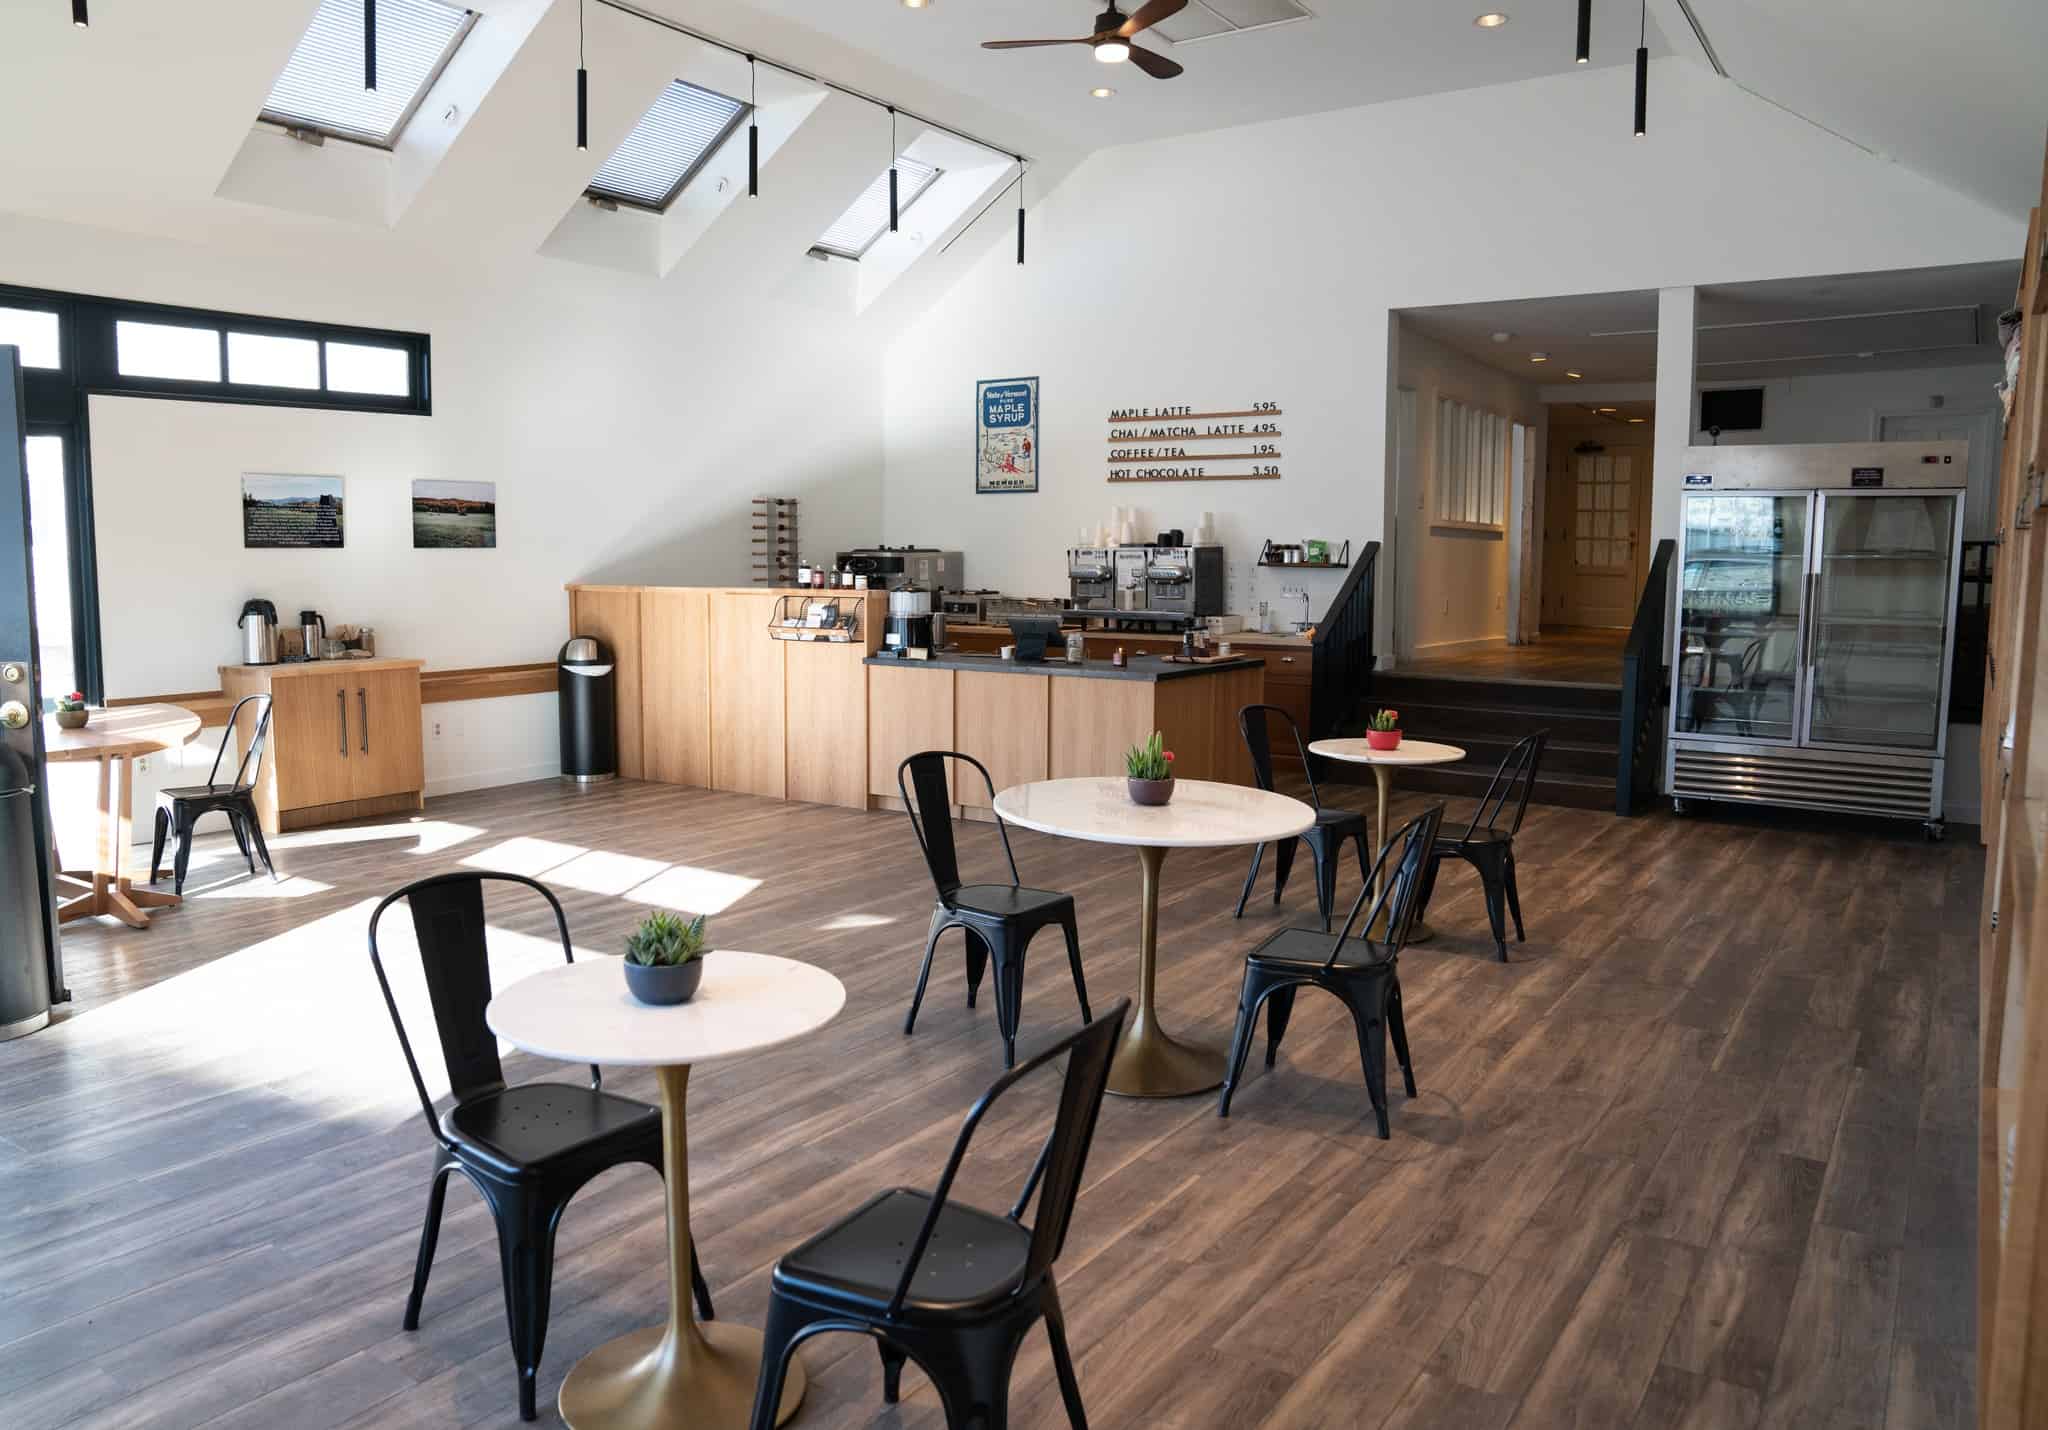 Dorset Maple Reserve Cafe Interior